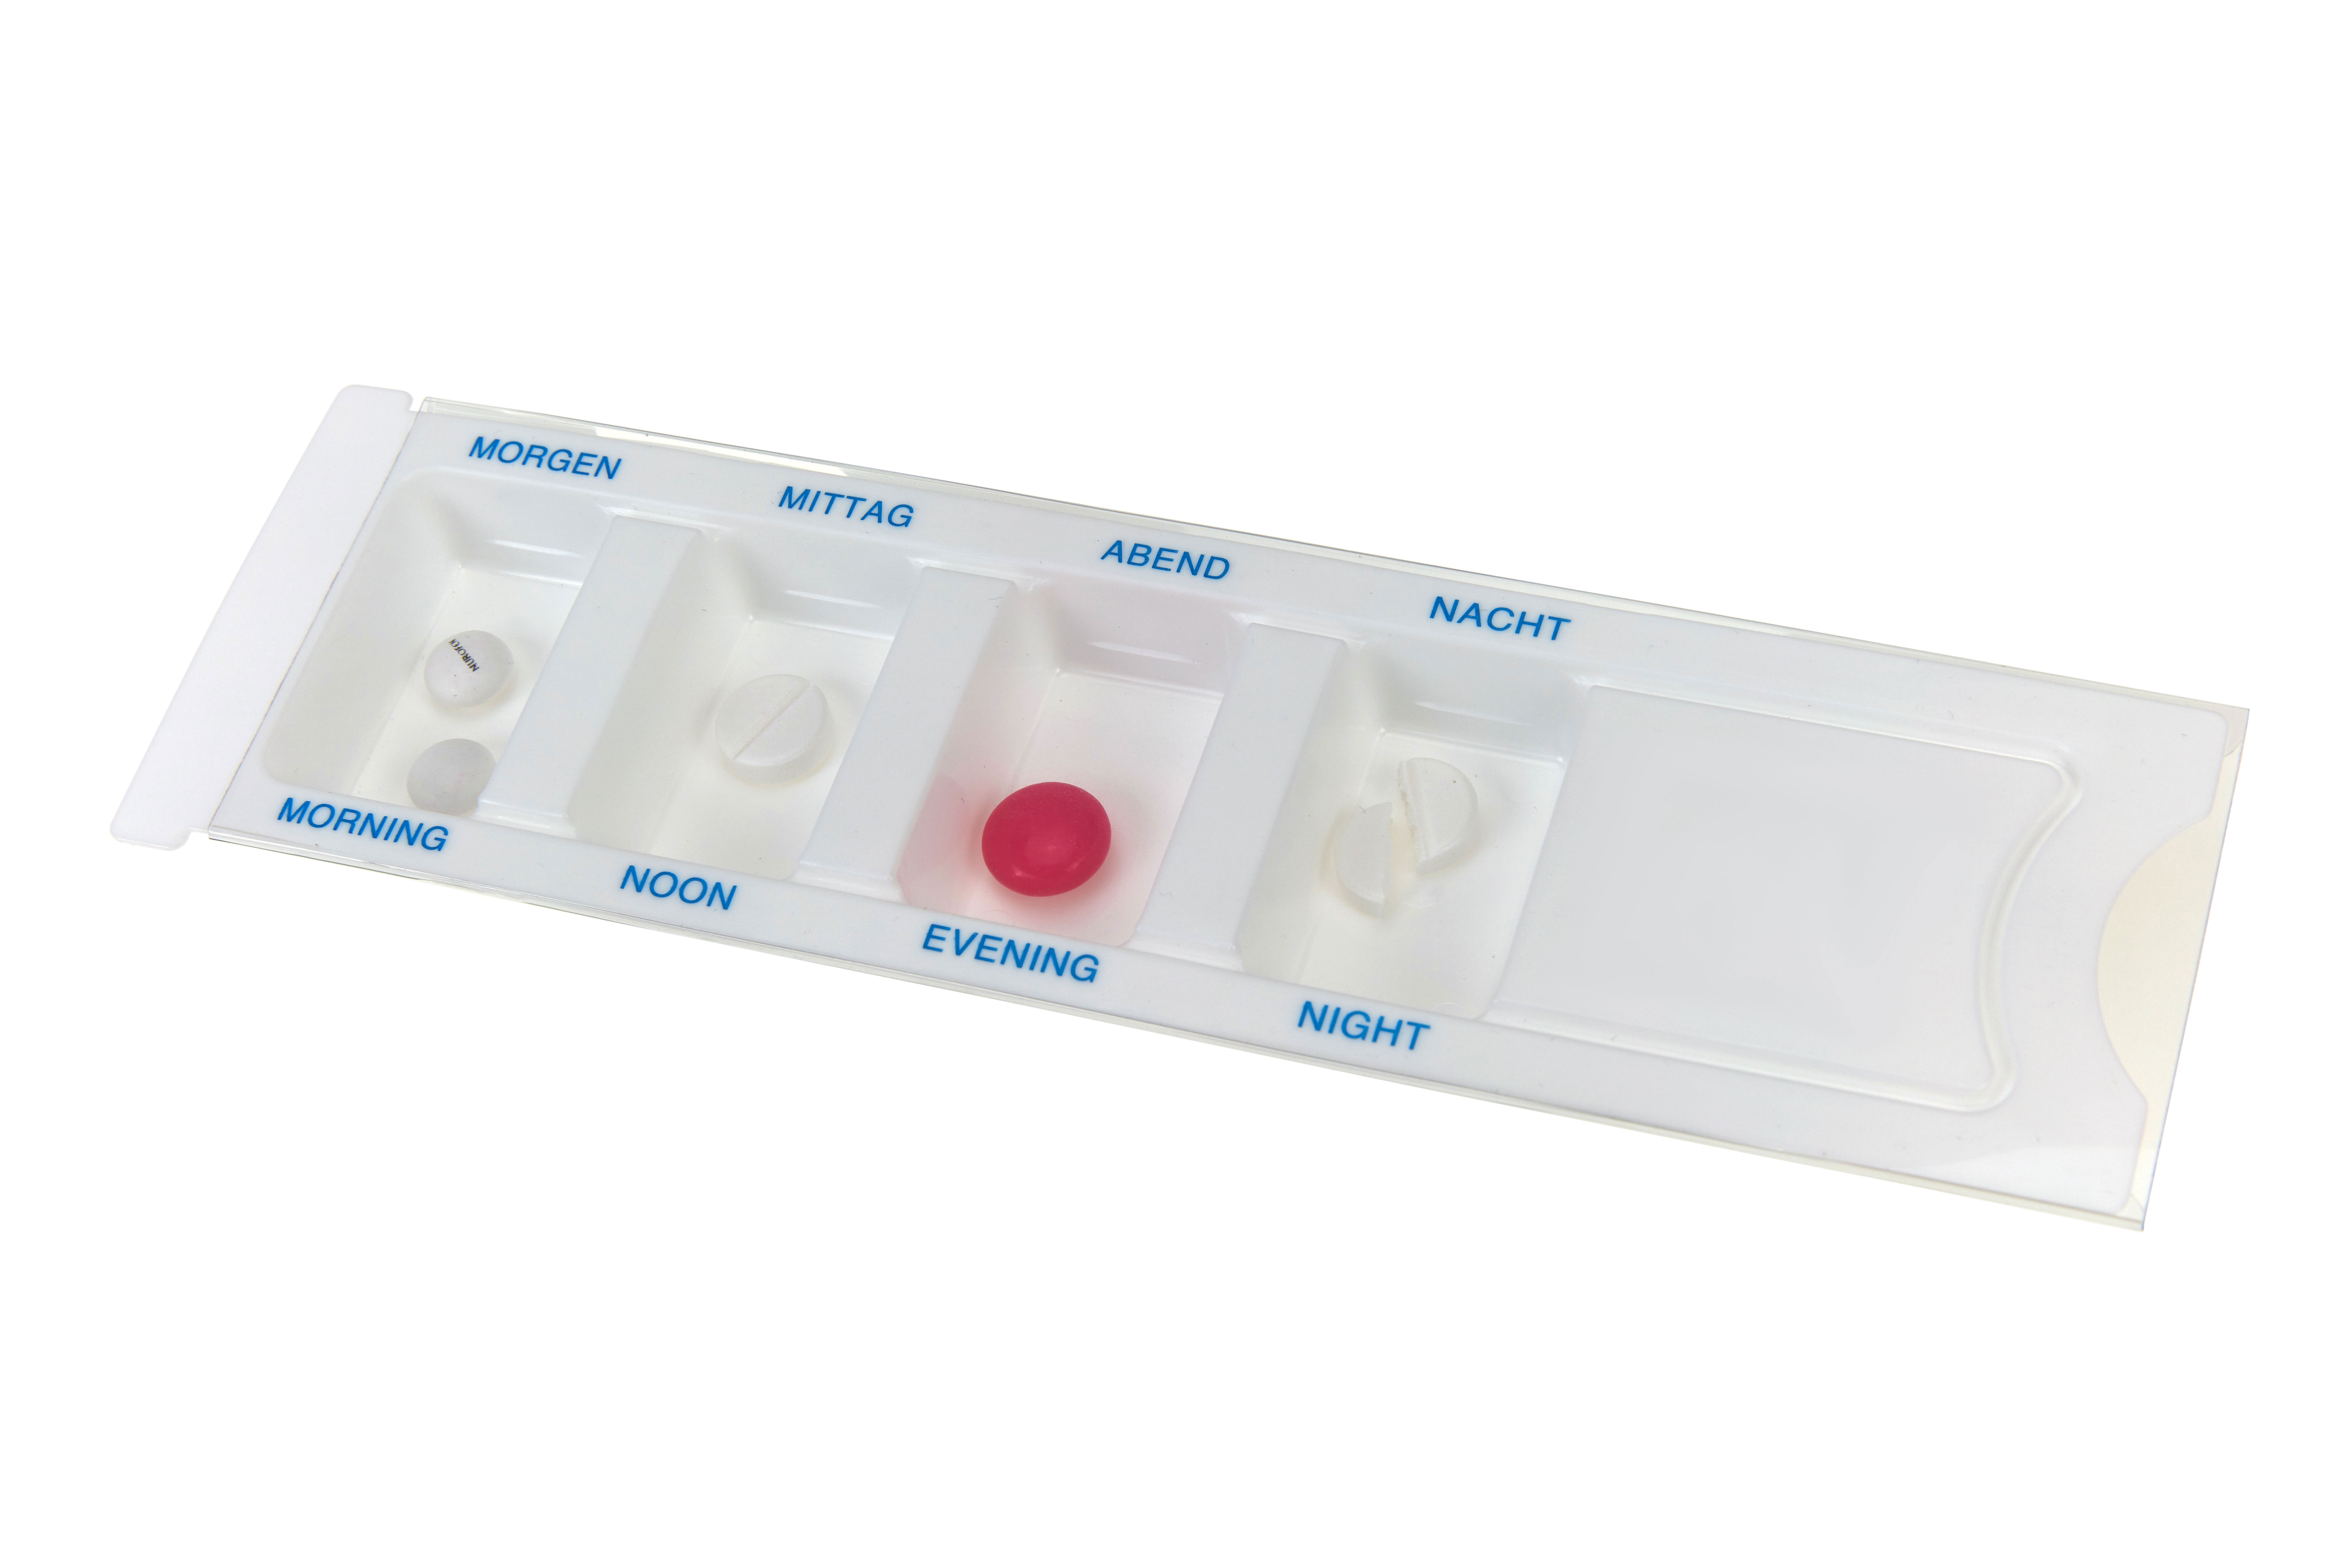 PD-200 Romed Medikamenten-Dispenser mit Klarsicht-deckel, 200 Stück im Karton.